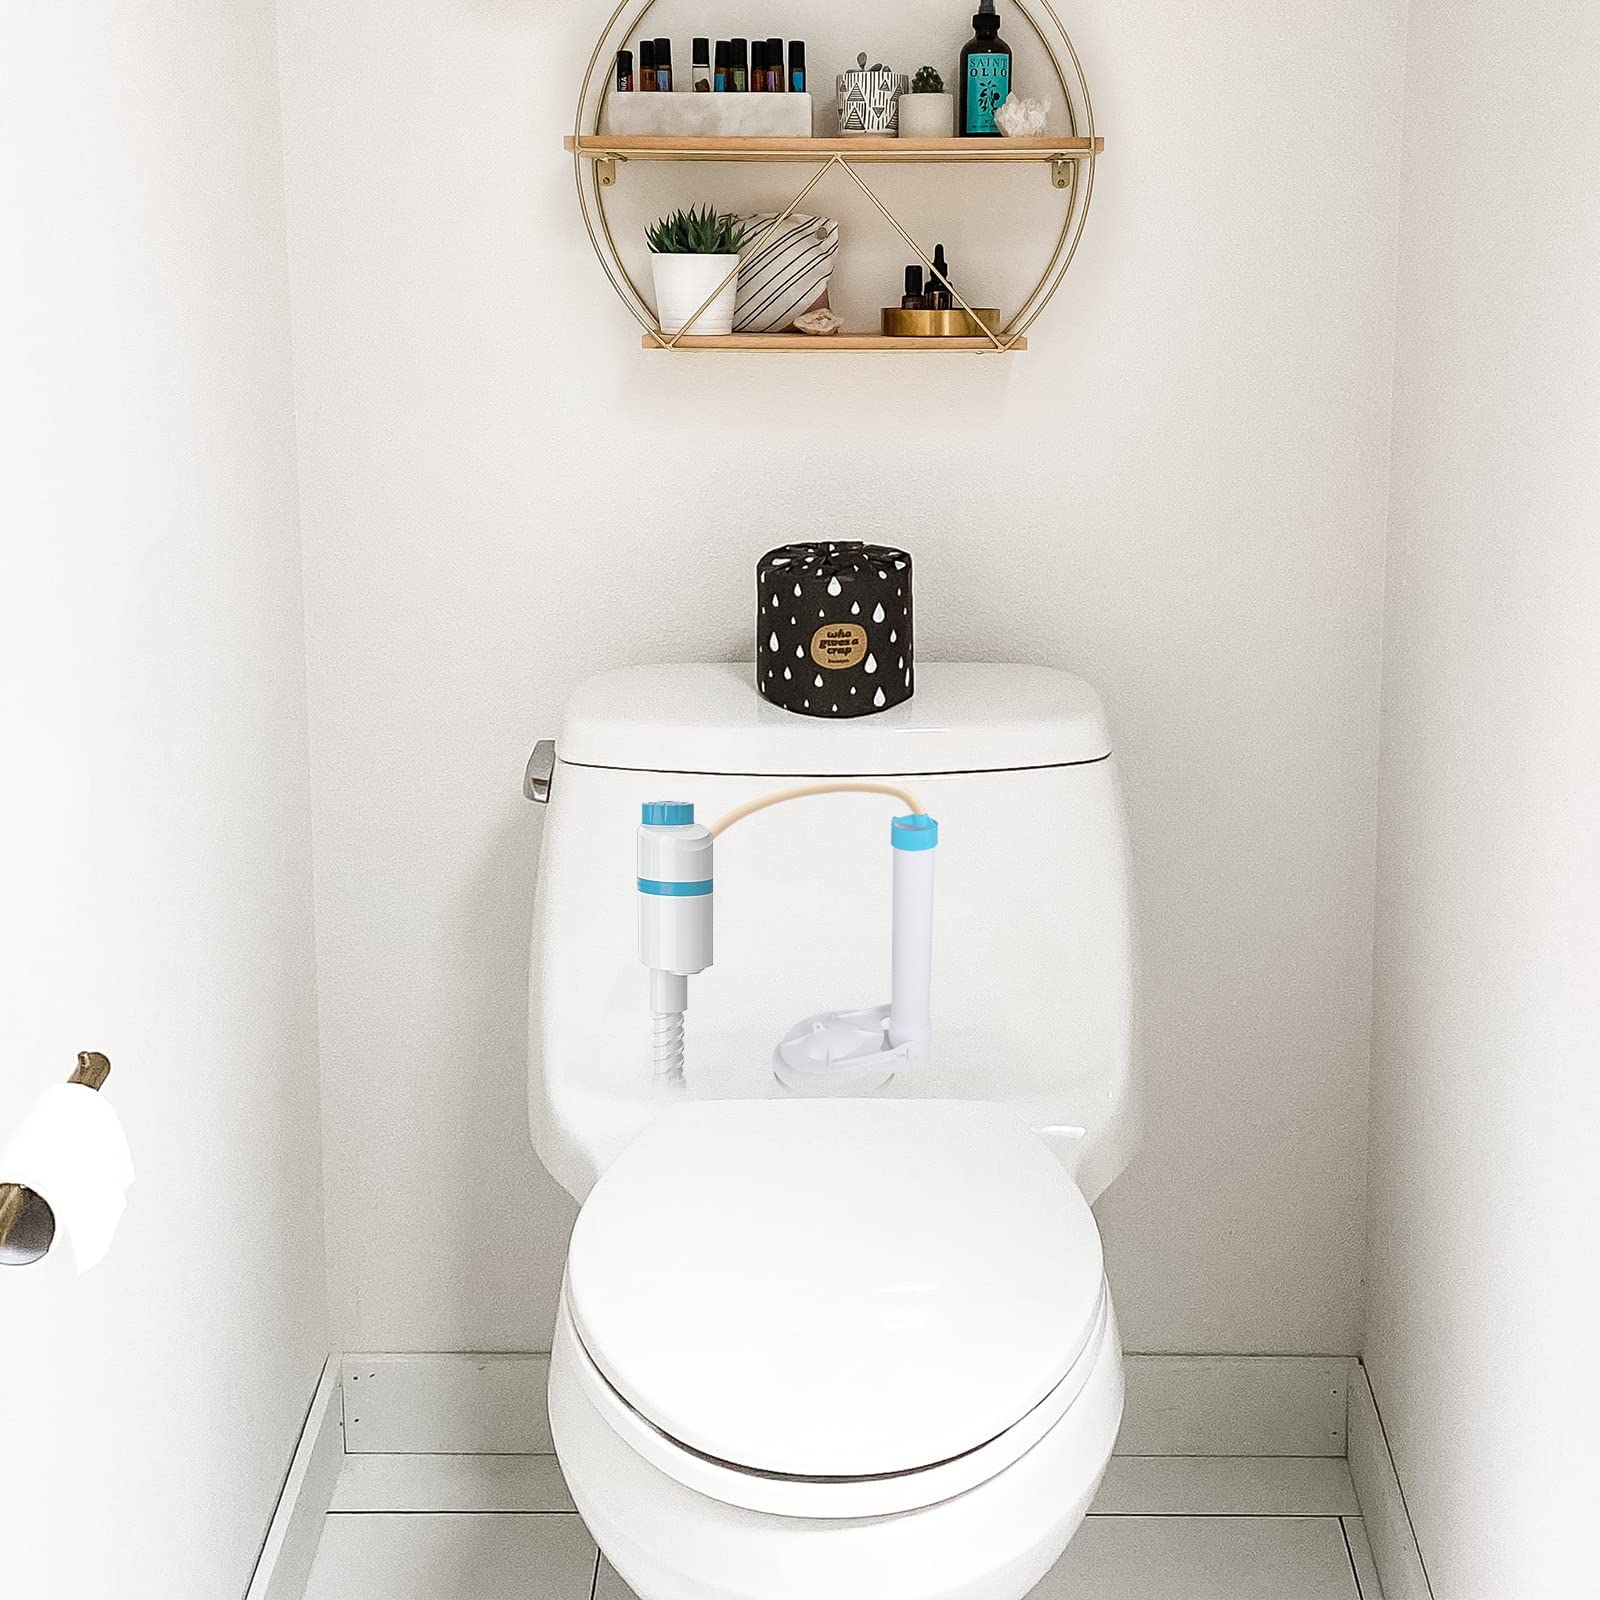 SAMODRA Silent Toilet Fill Valve Adjustable Water Level, High Performance Toilet Flush Valve Replacement Kit Anti-Siphon Water-Saving, Installs in Minutes